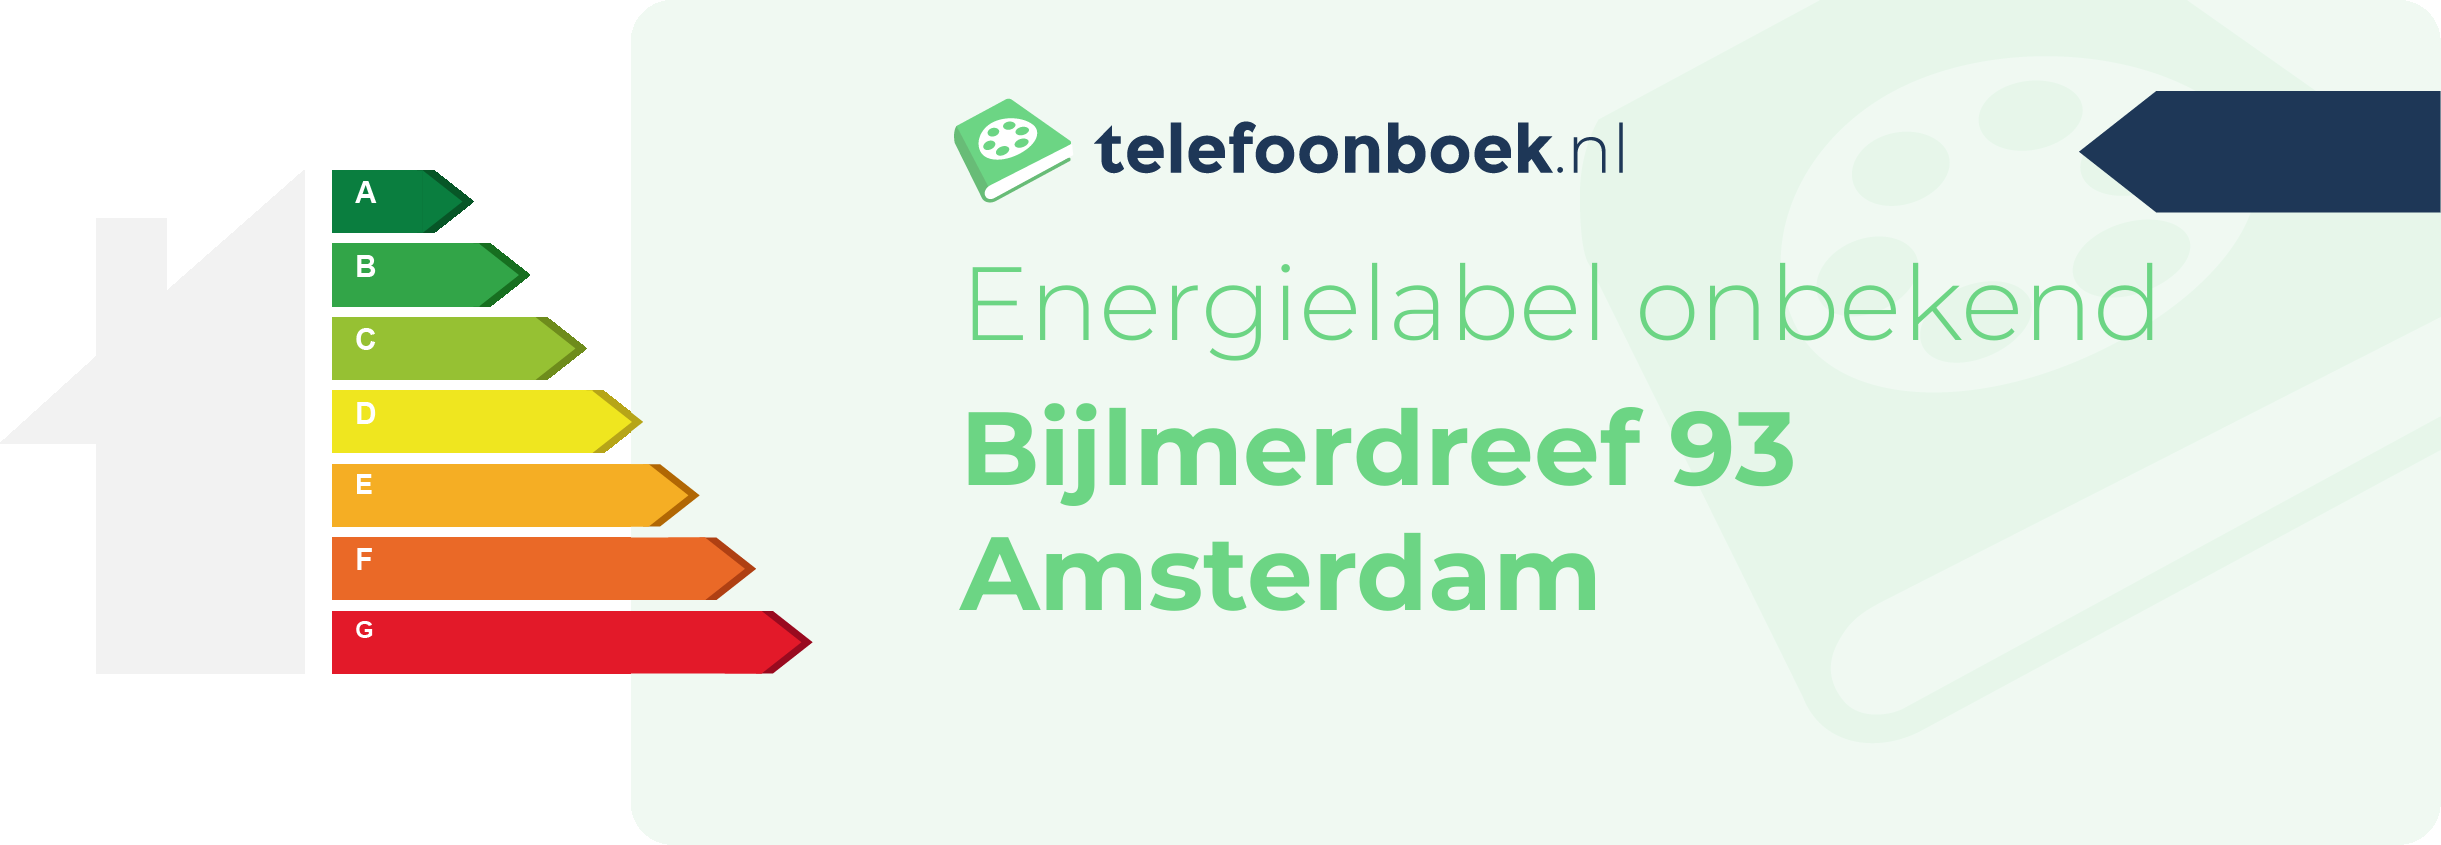 Energielabel Bijlmerdreef 93 Amsterdam